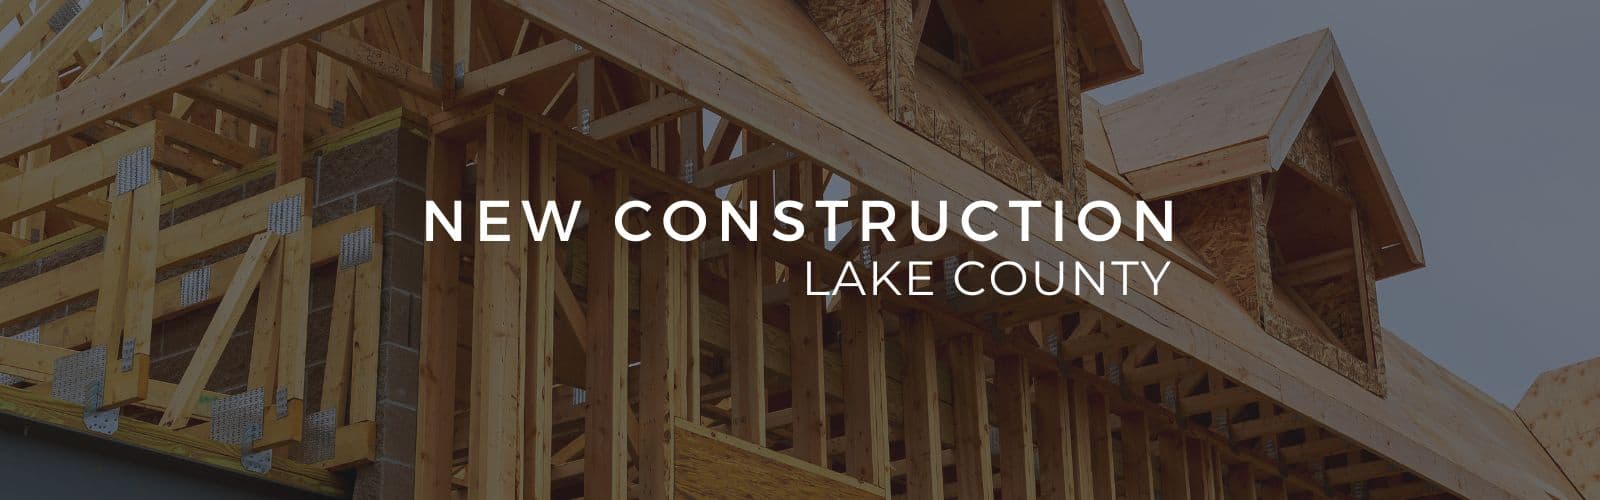 New Construction Lake County